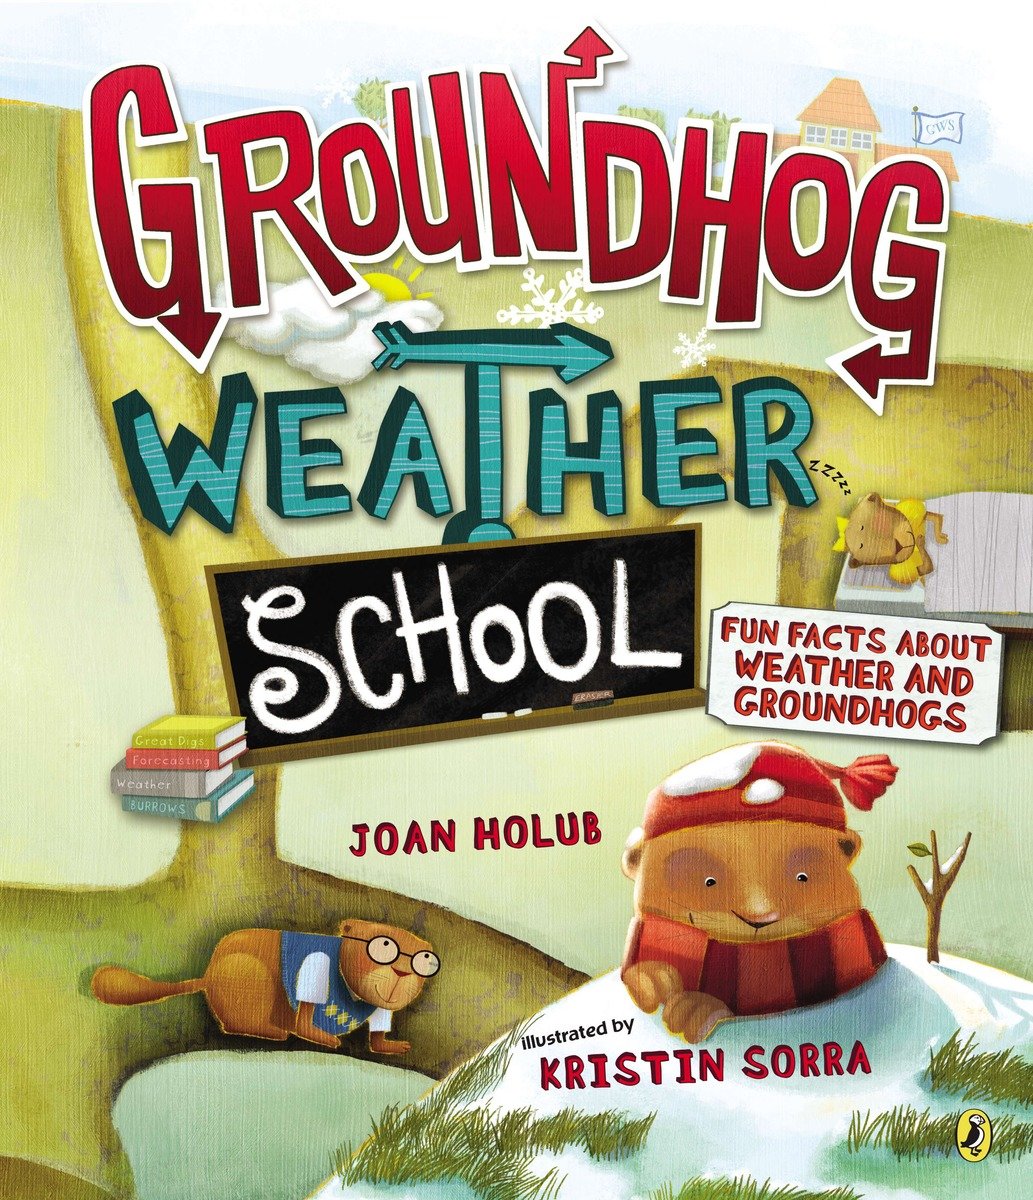 Groundhog Weather School cover image